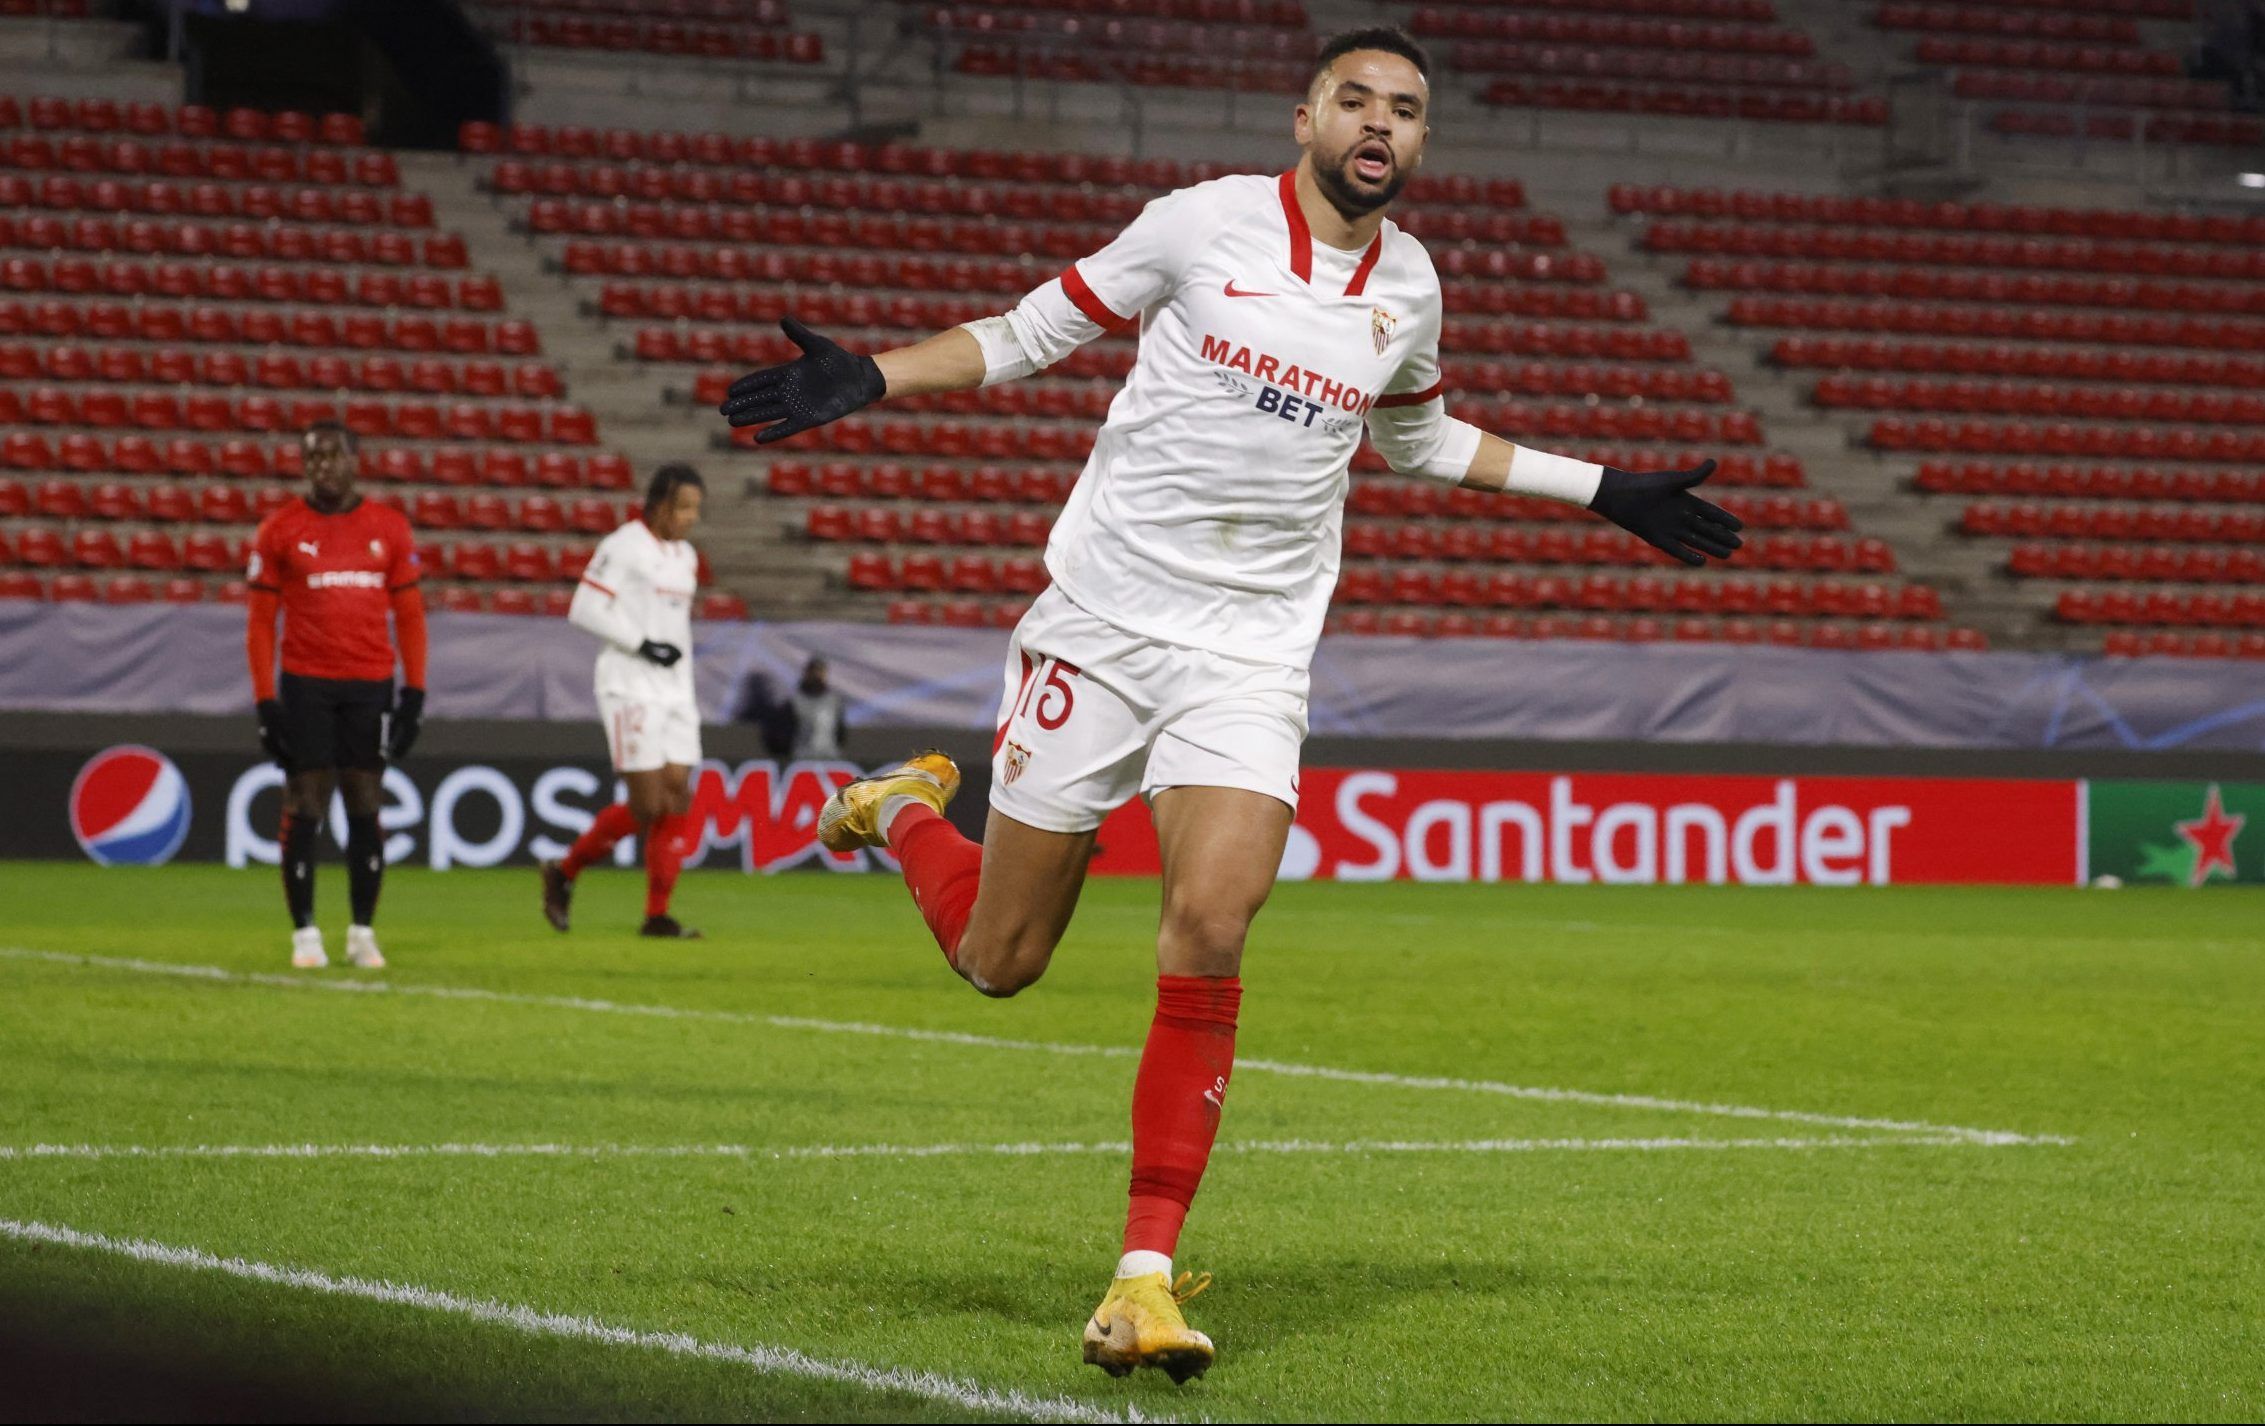 sevilla forward youssef en nesyri celebrates scoring against rennes in the champions league